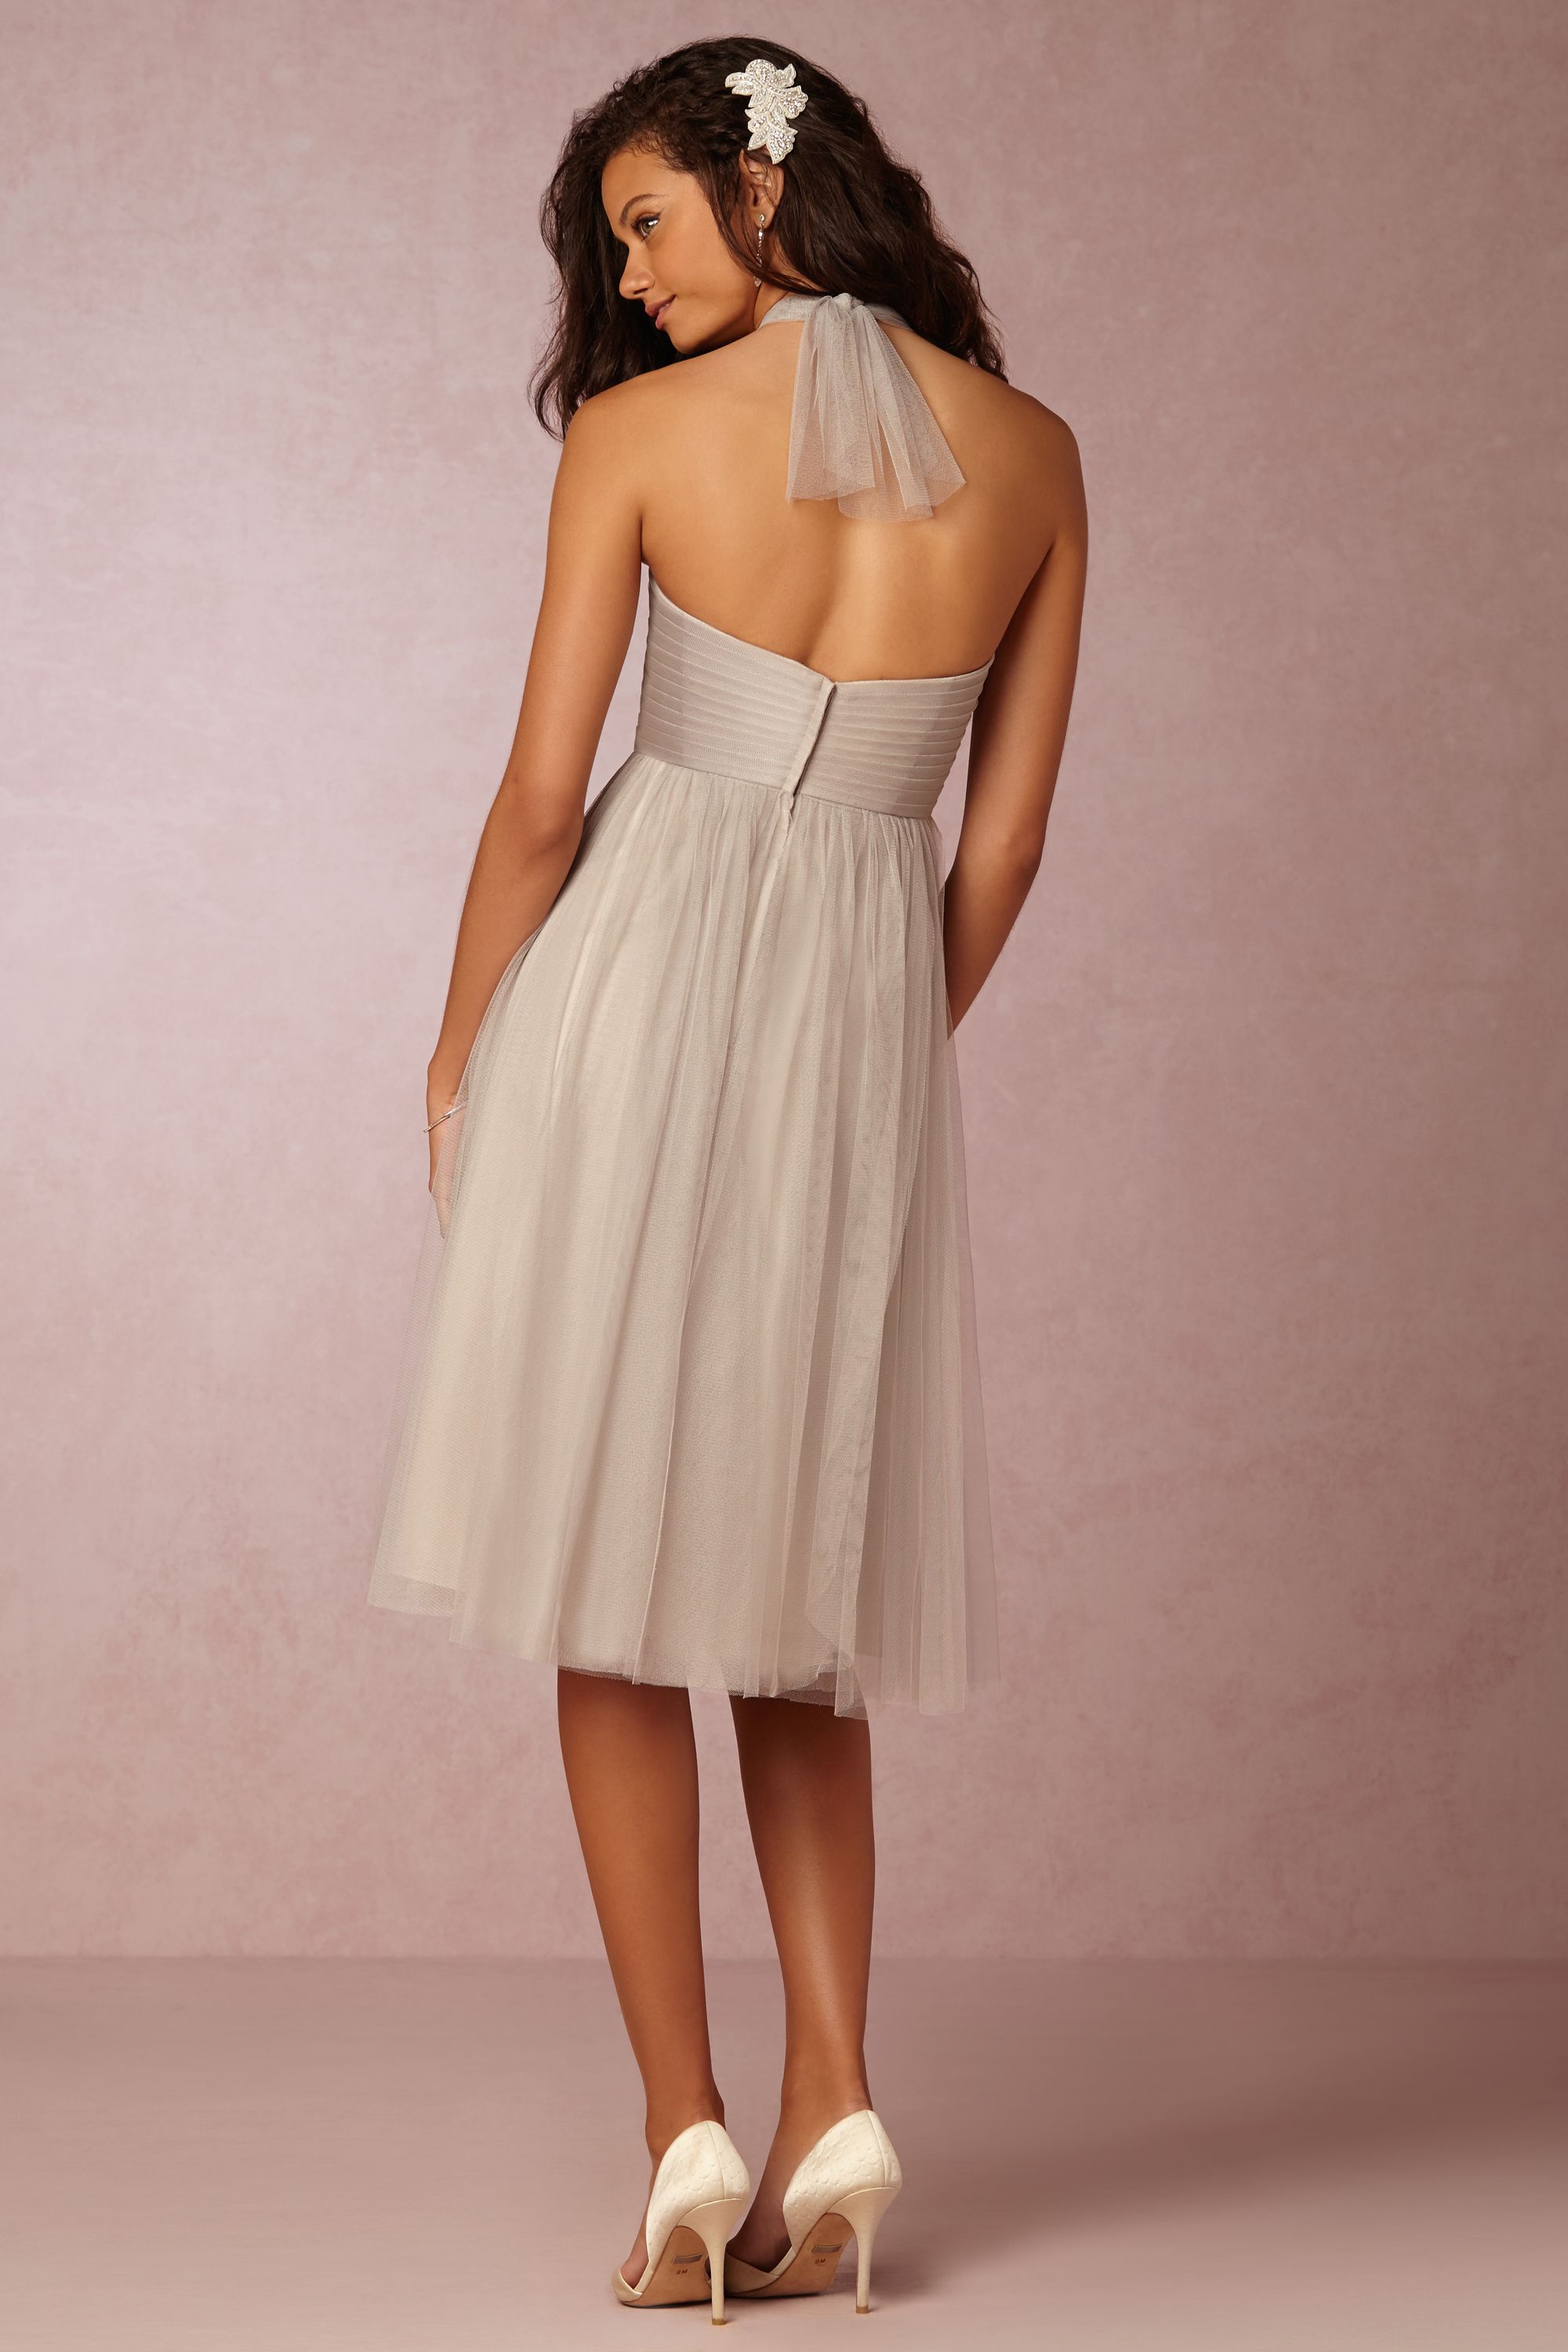 Maia Dress in Sale Dresses | BHLDN